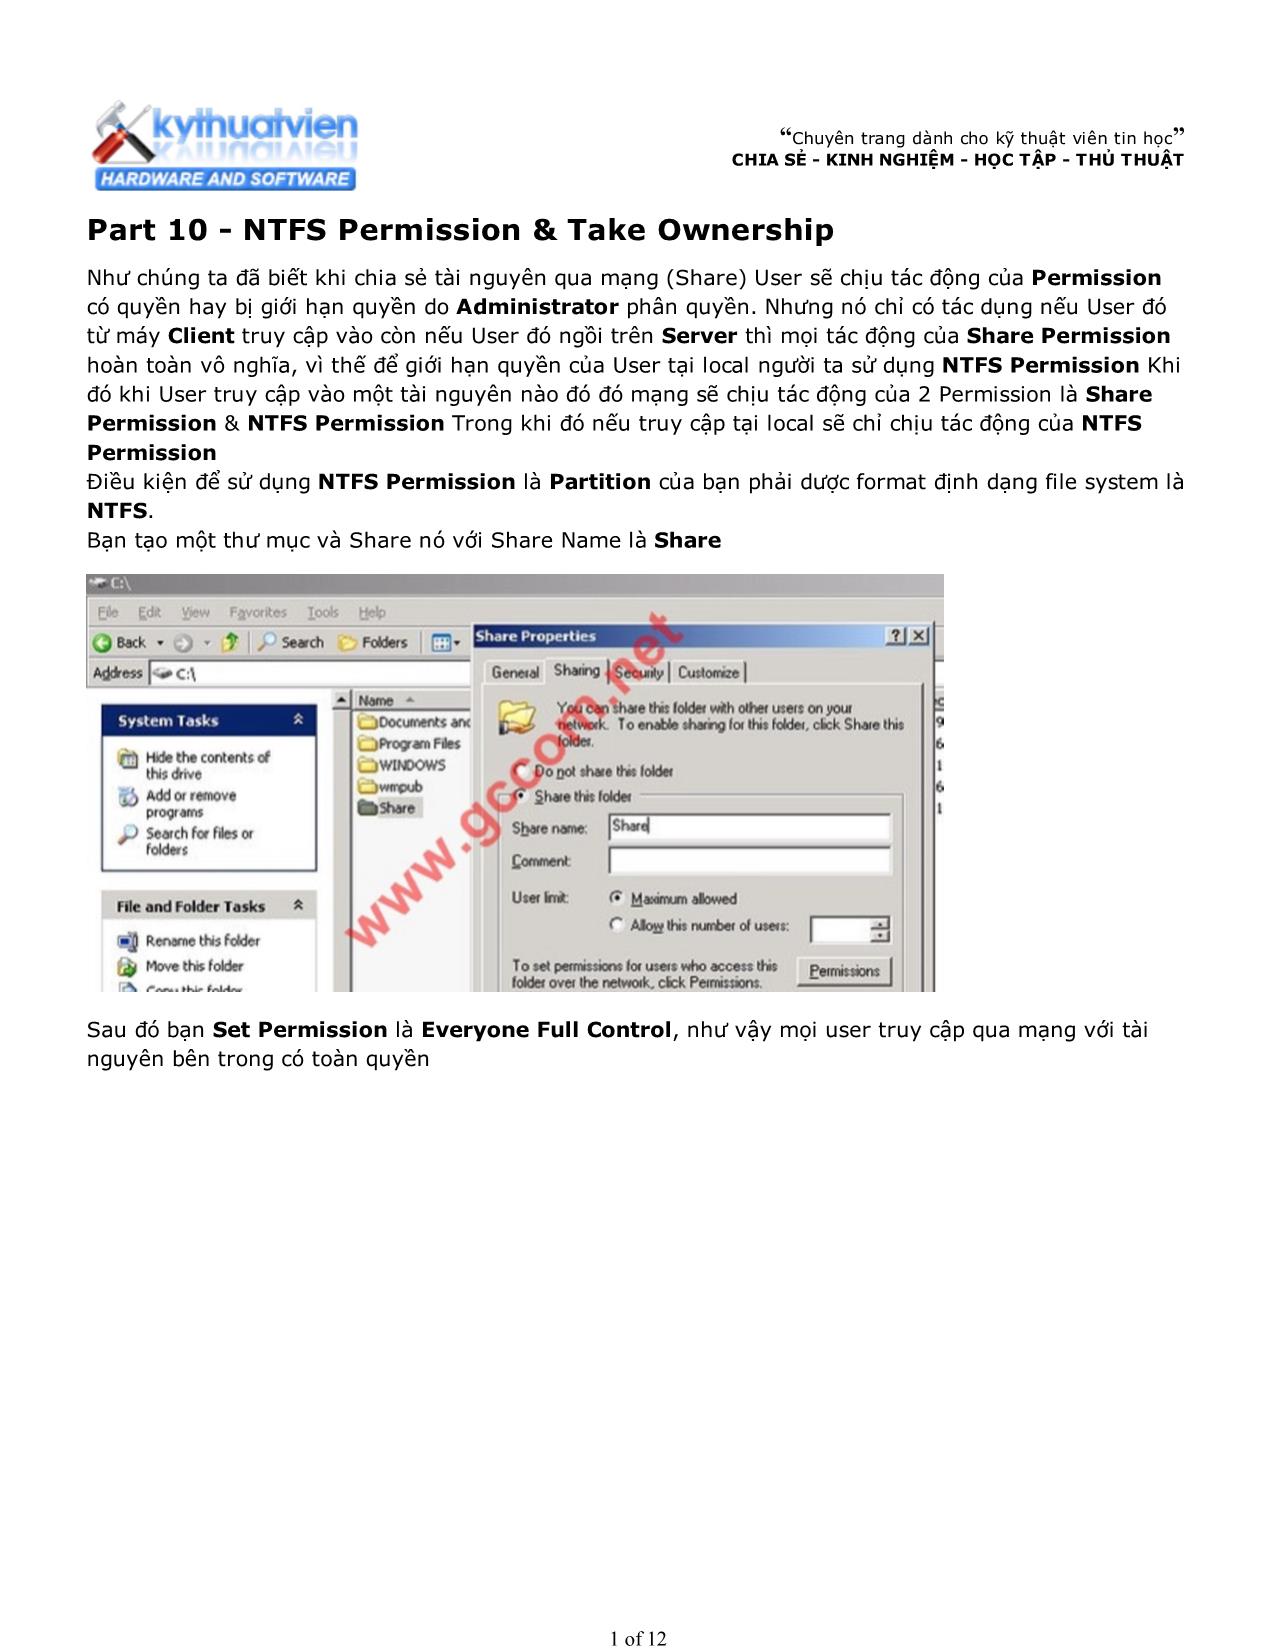 NTFS Permission & Take Ownership trang 1